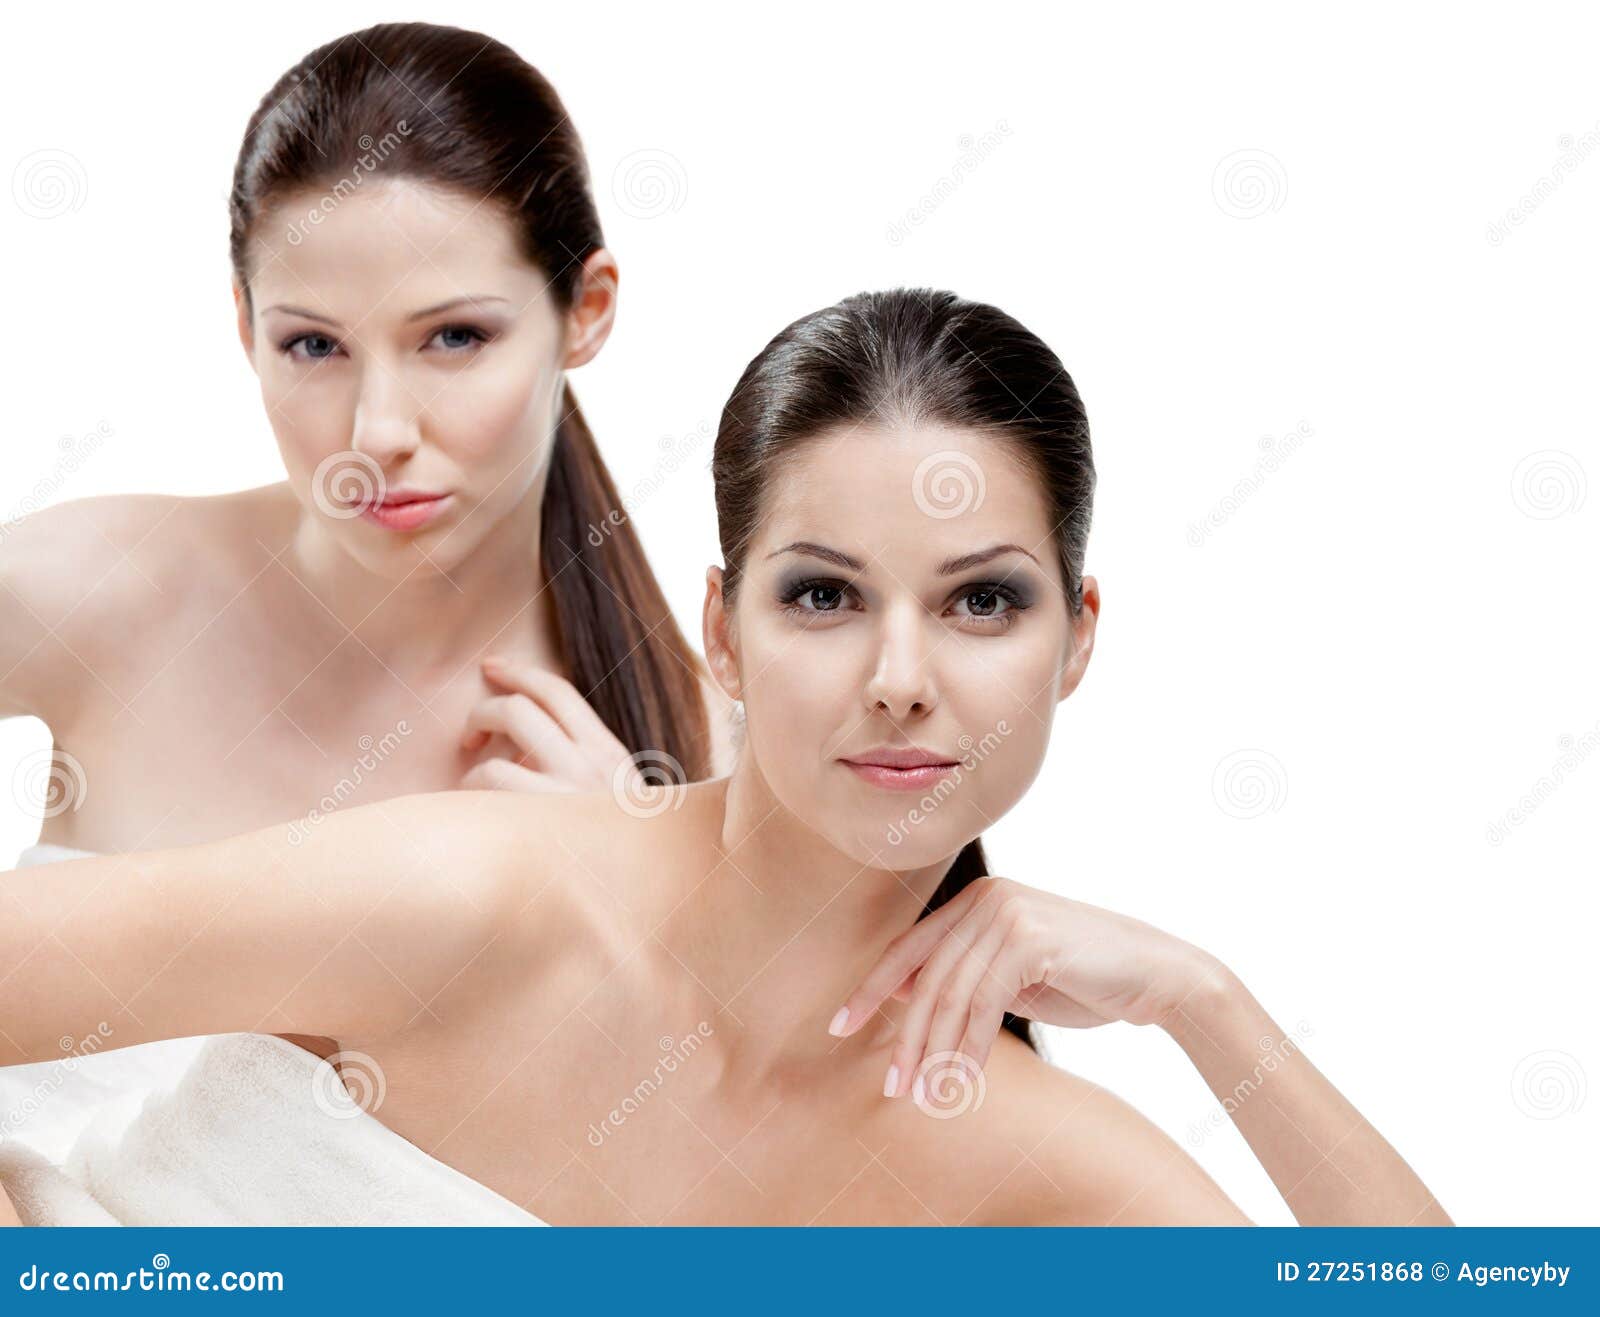 Half Length Portrait of Two Half Naked Women Stock Photo